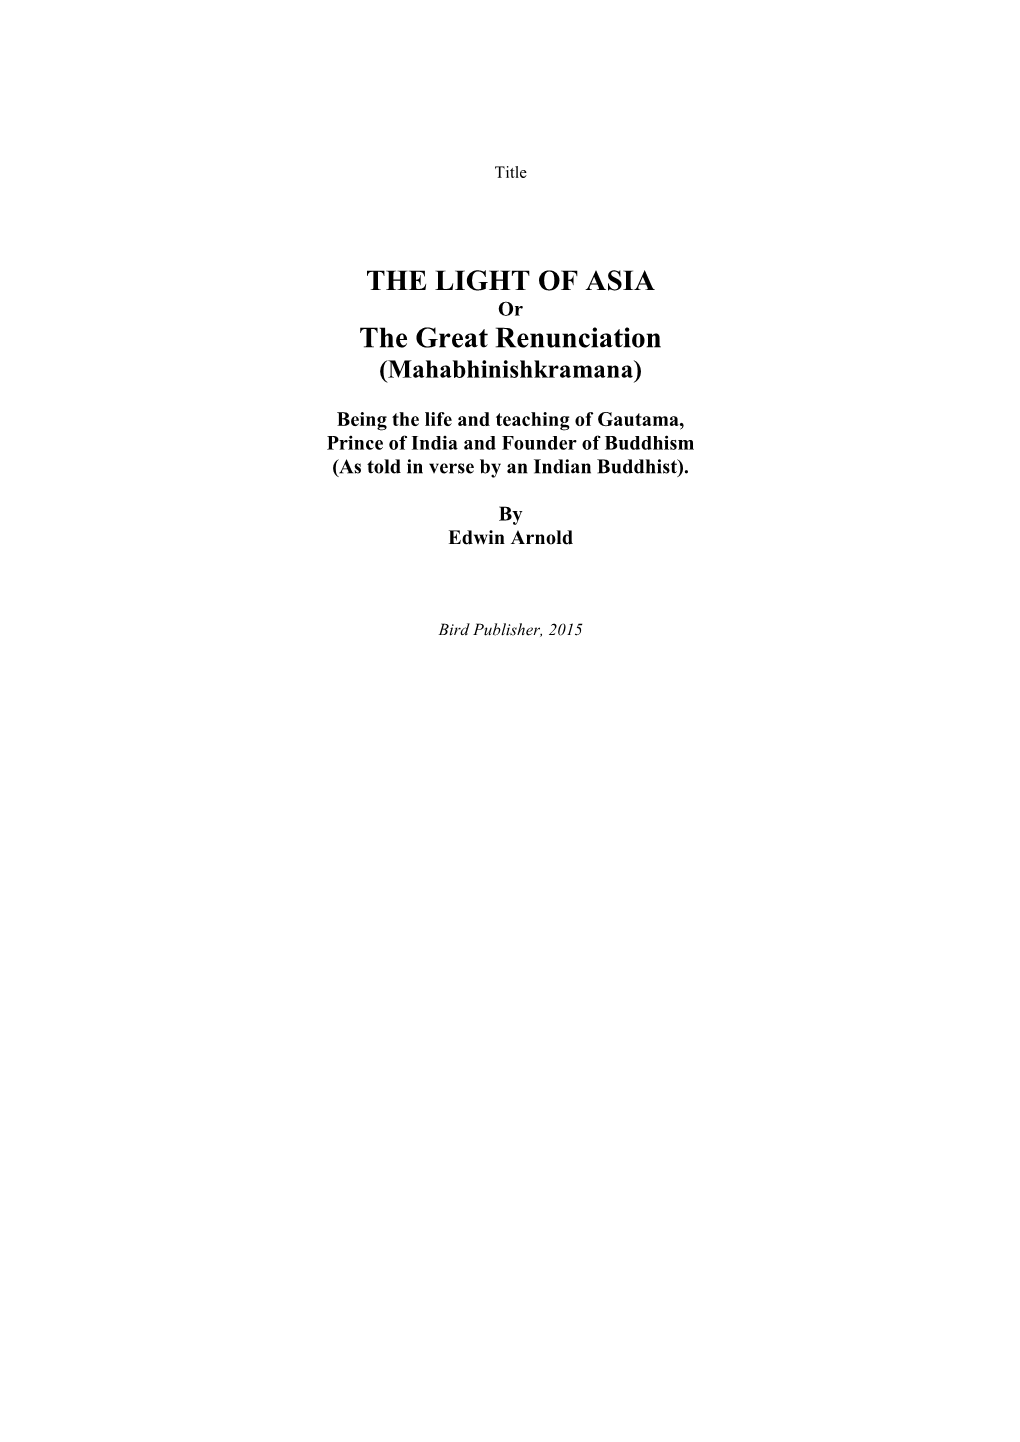 THE LIGHT of ASIA Or the Great Renunciation (Mahabhinishkramana)